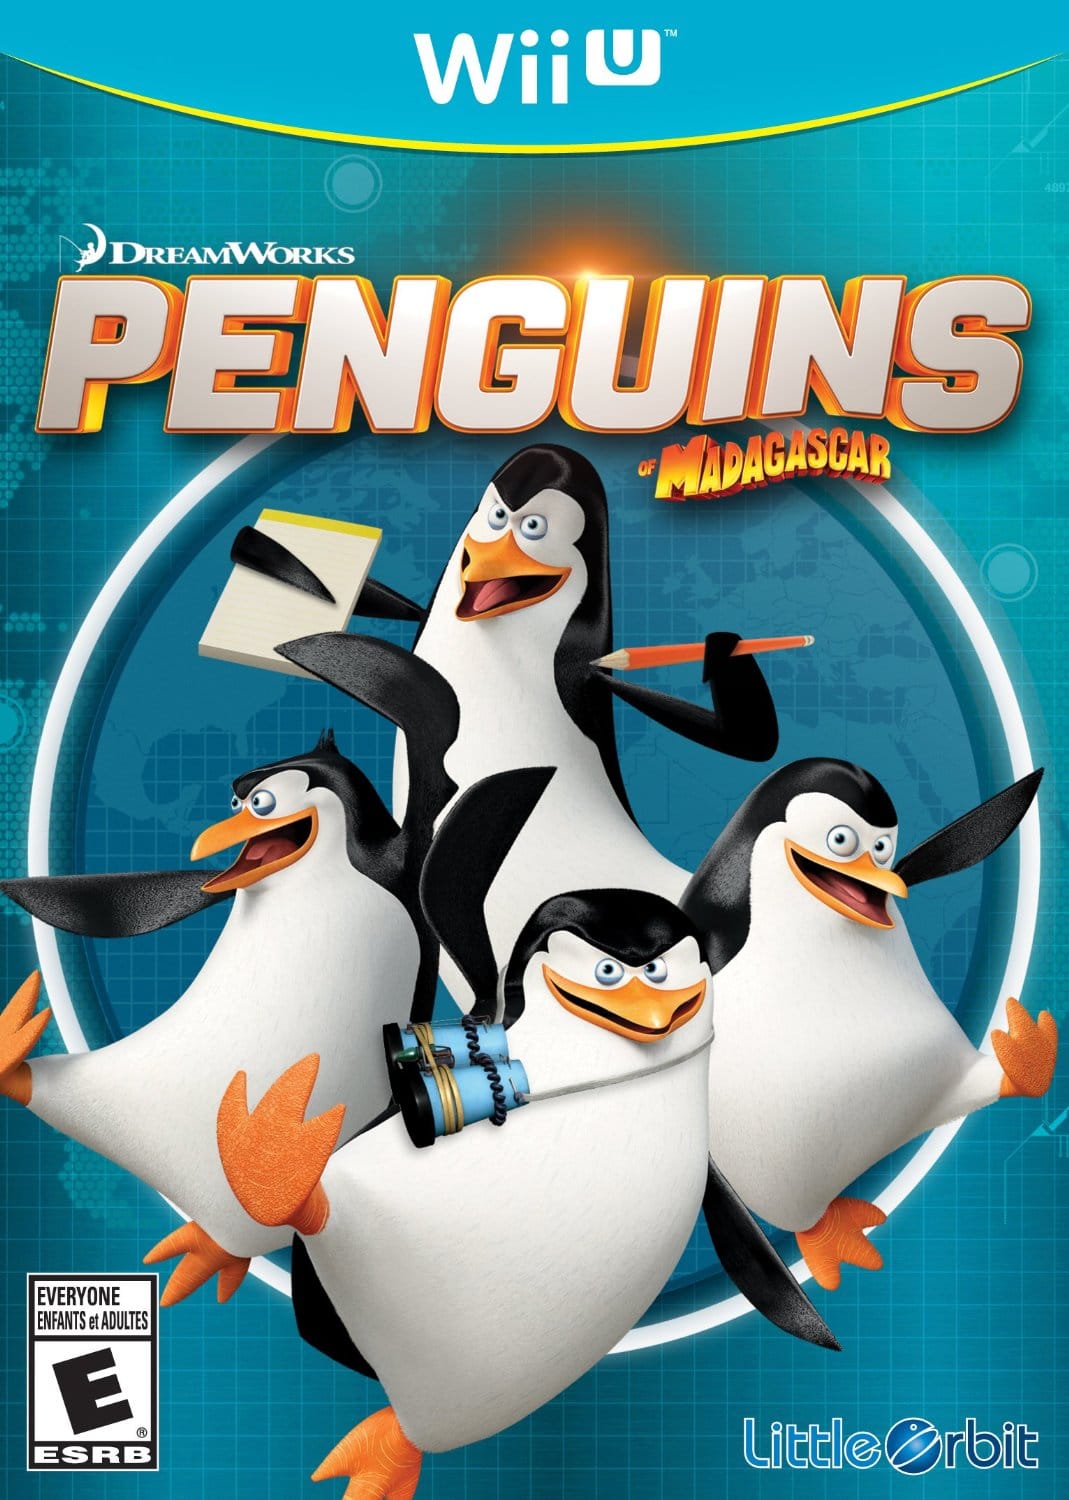 penguins of madagascar streaming